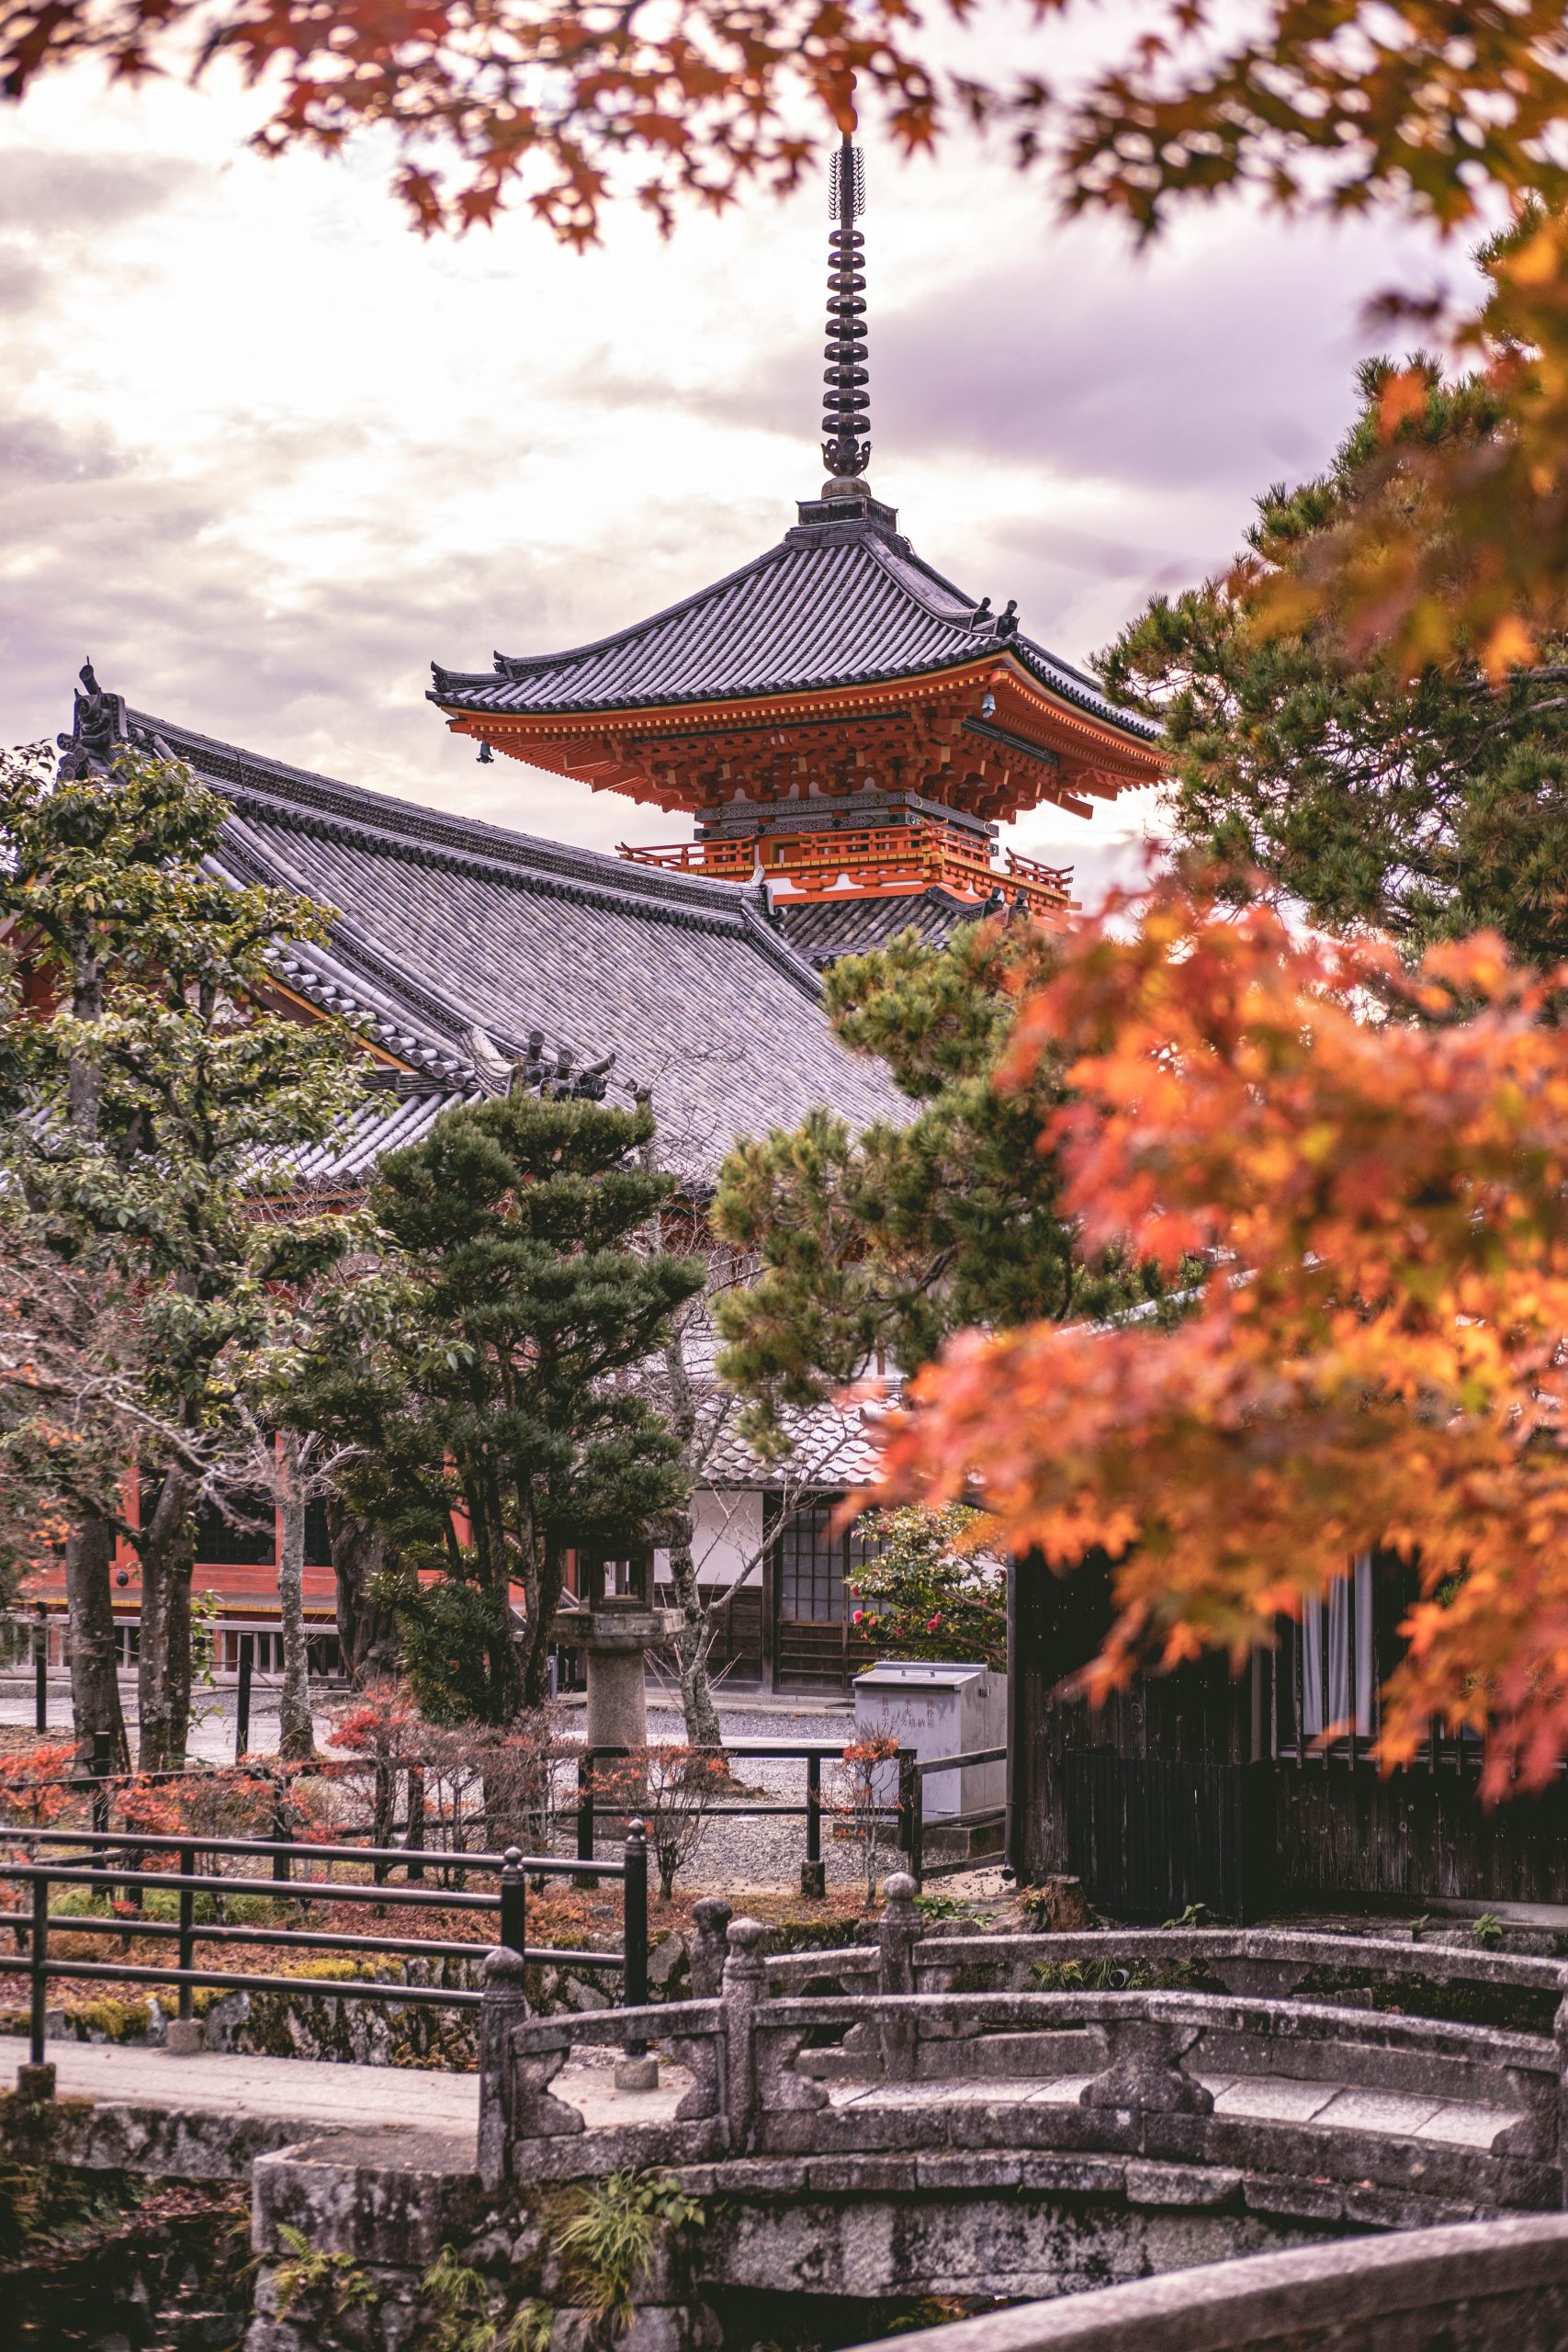 Kyoto looking beautiful in November during Koyo festival